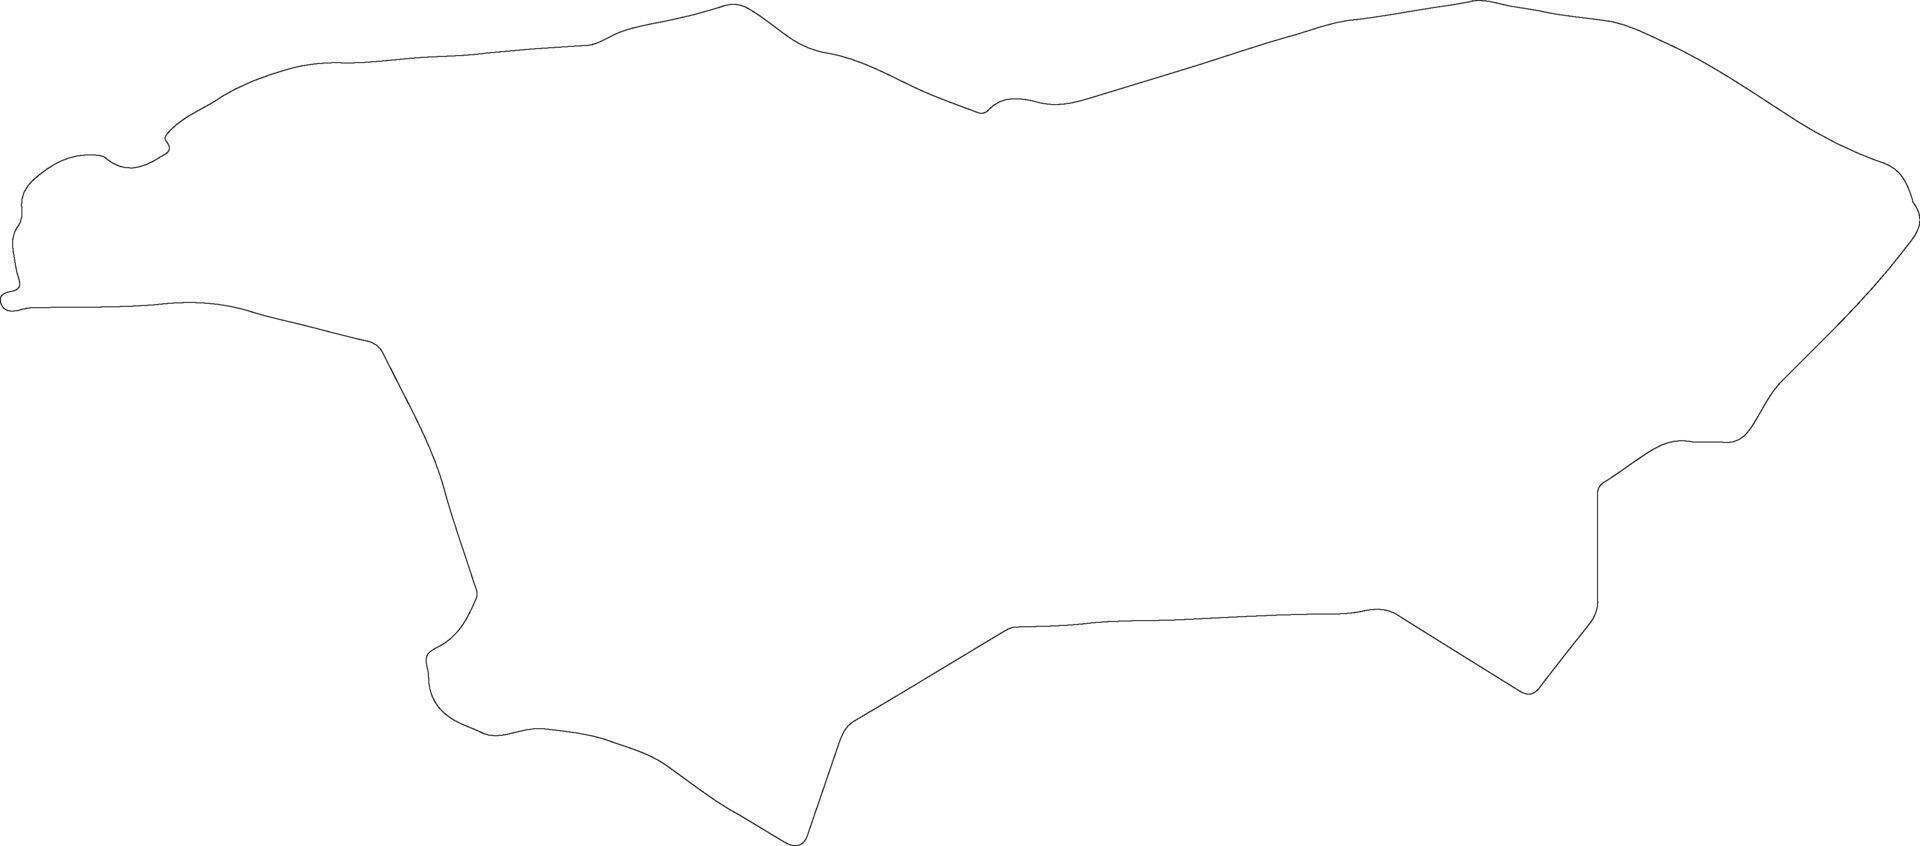 karsava's Letland schets kaart vector